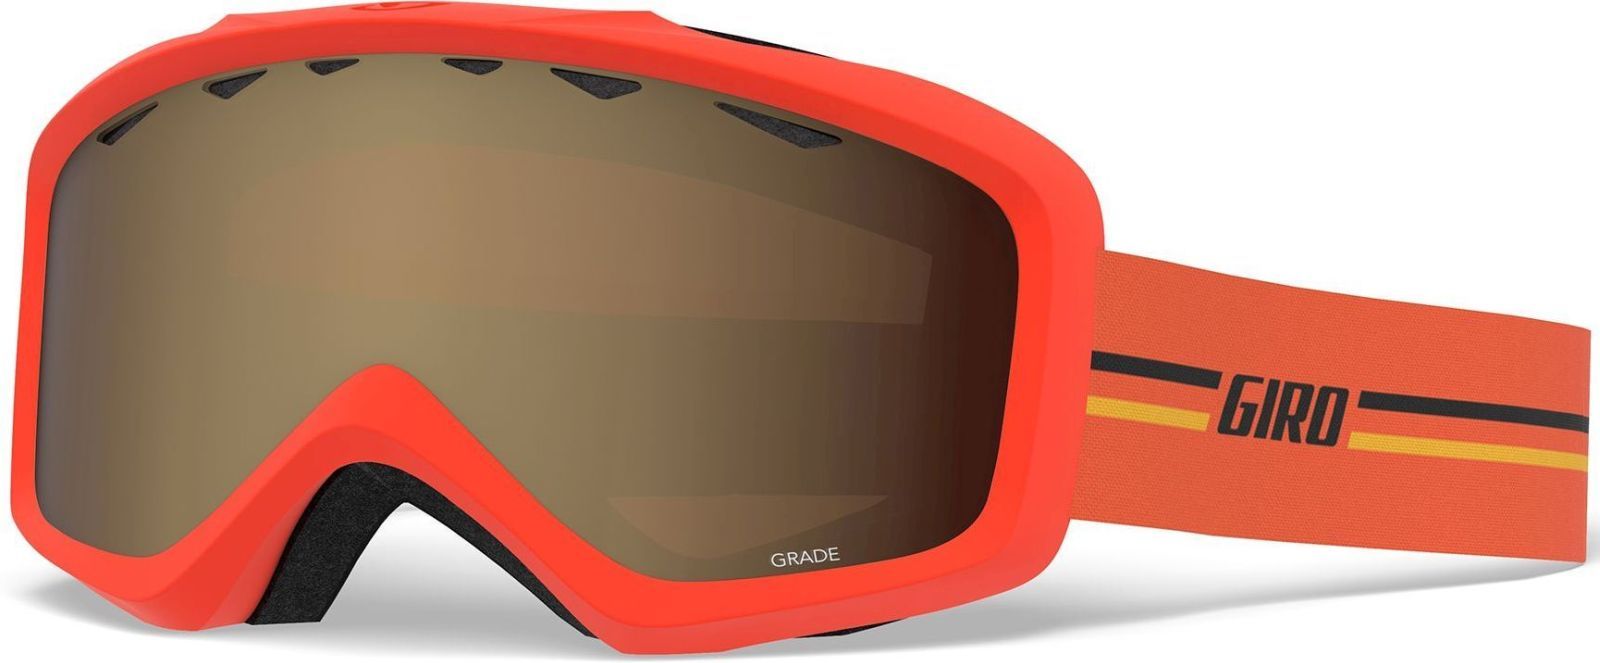 Giro Grade - GP Orange AR40 uni - obrázek 1